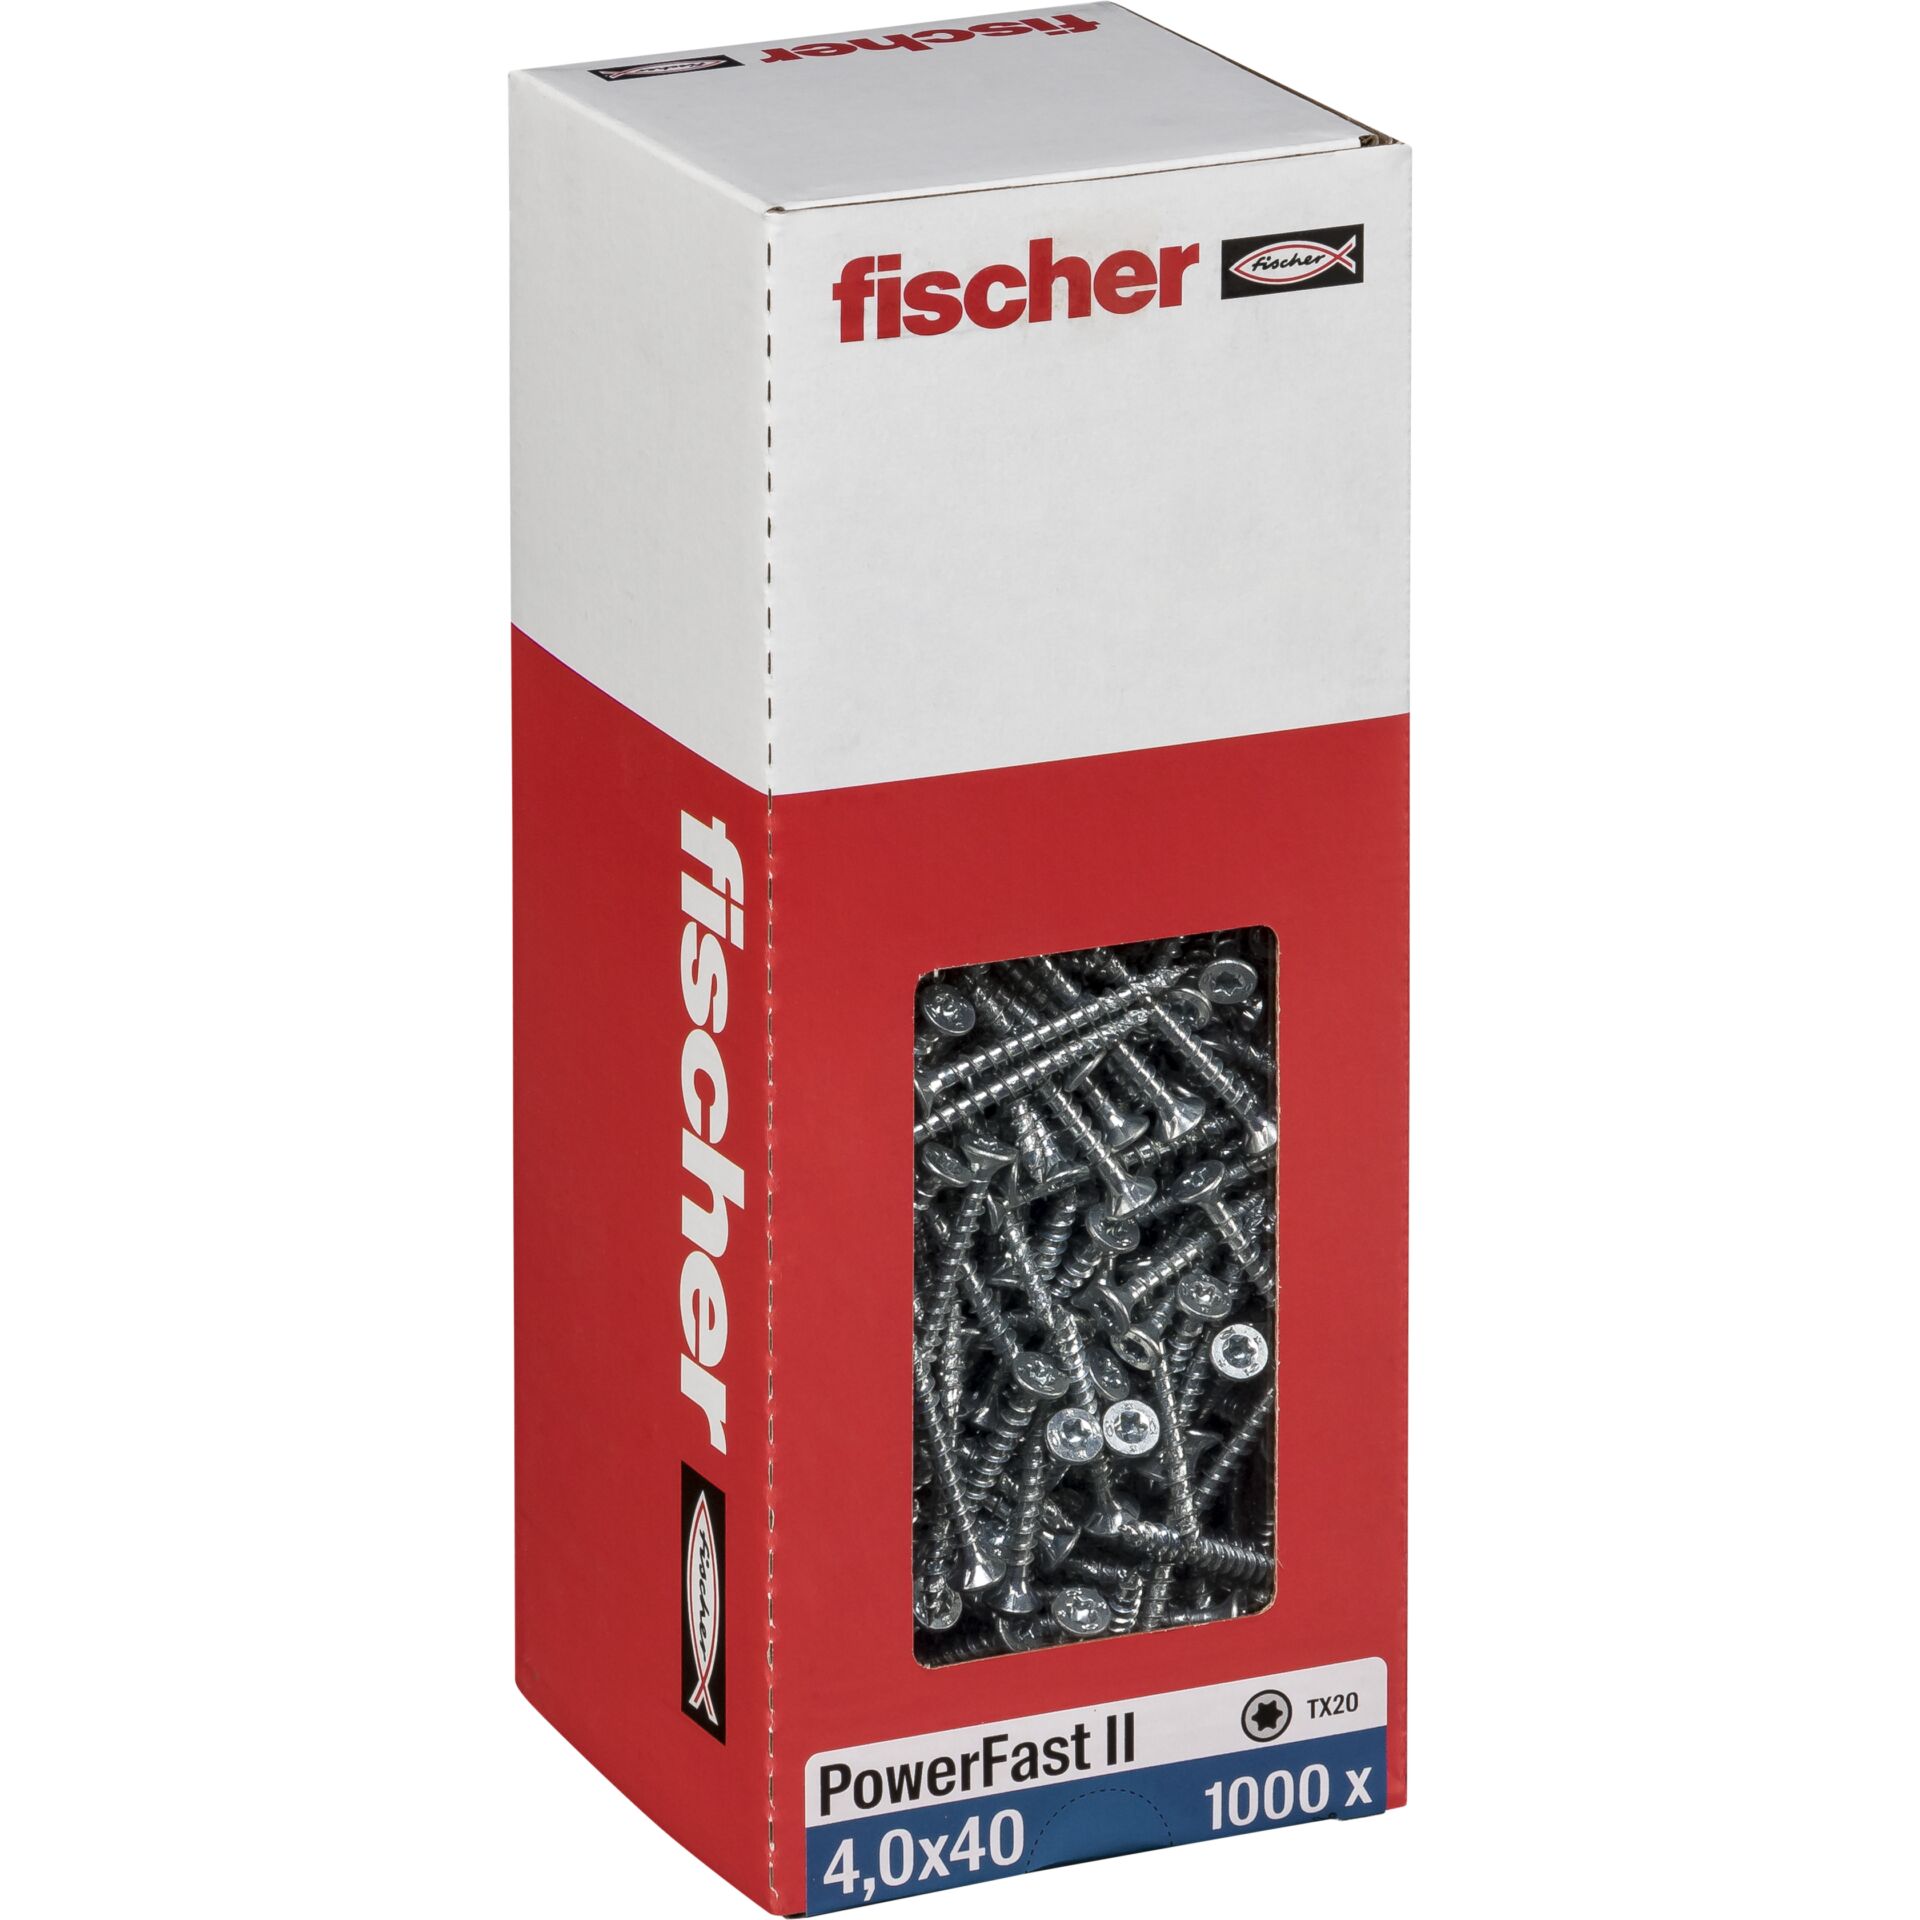 Fischer PowerFast II 4,0x40 SK TX VG blvz 1000